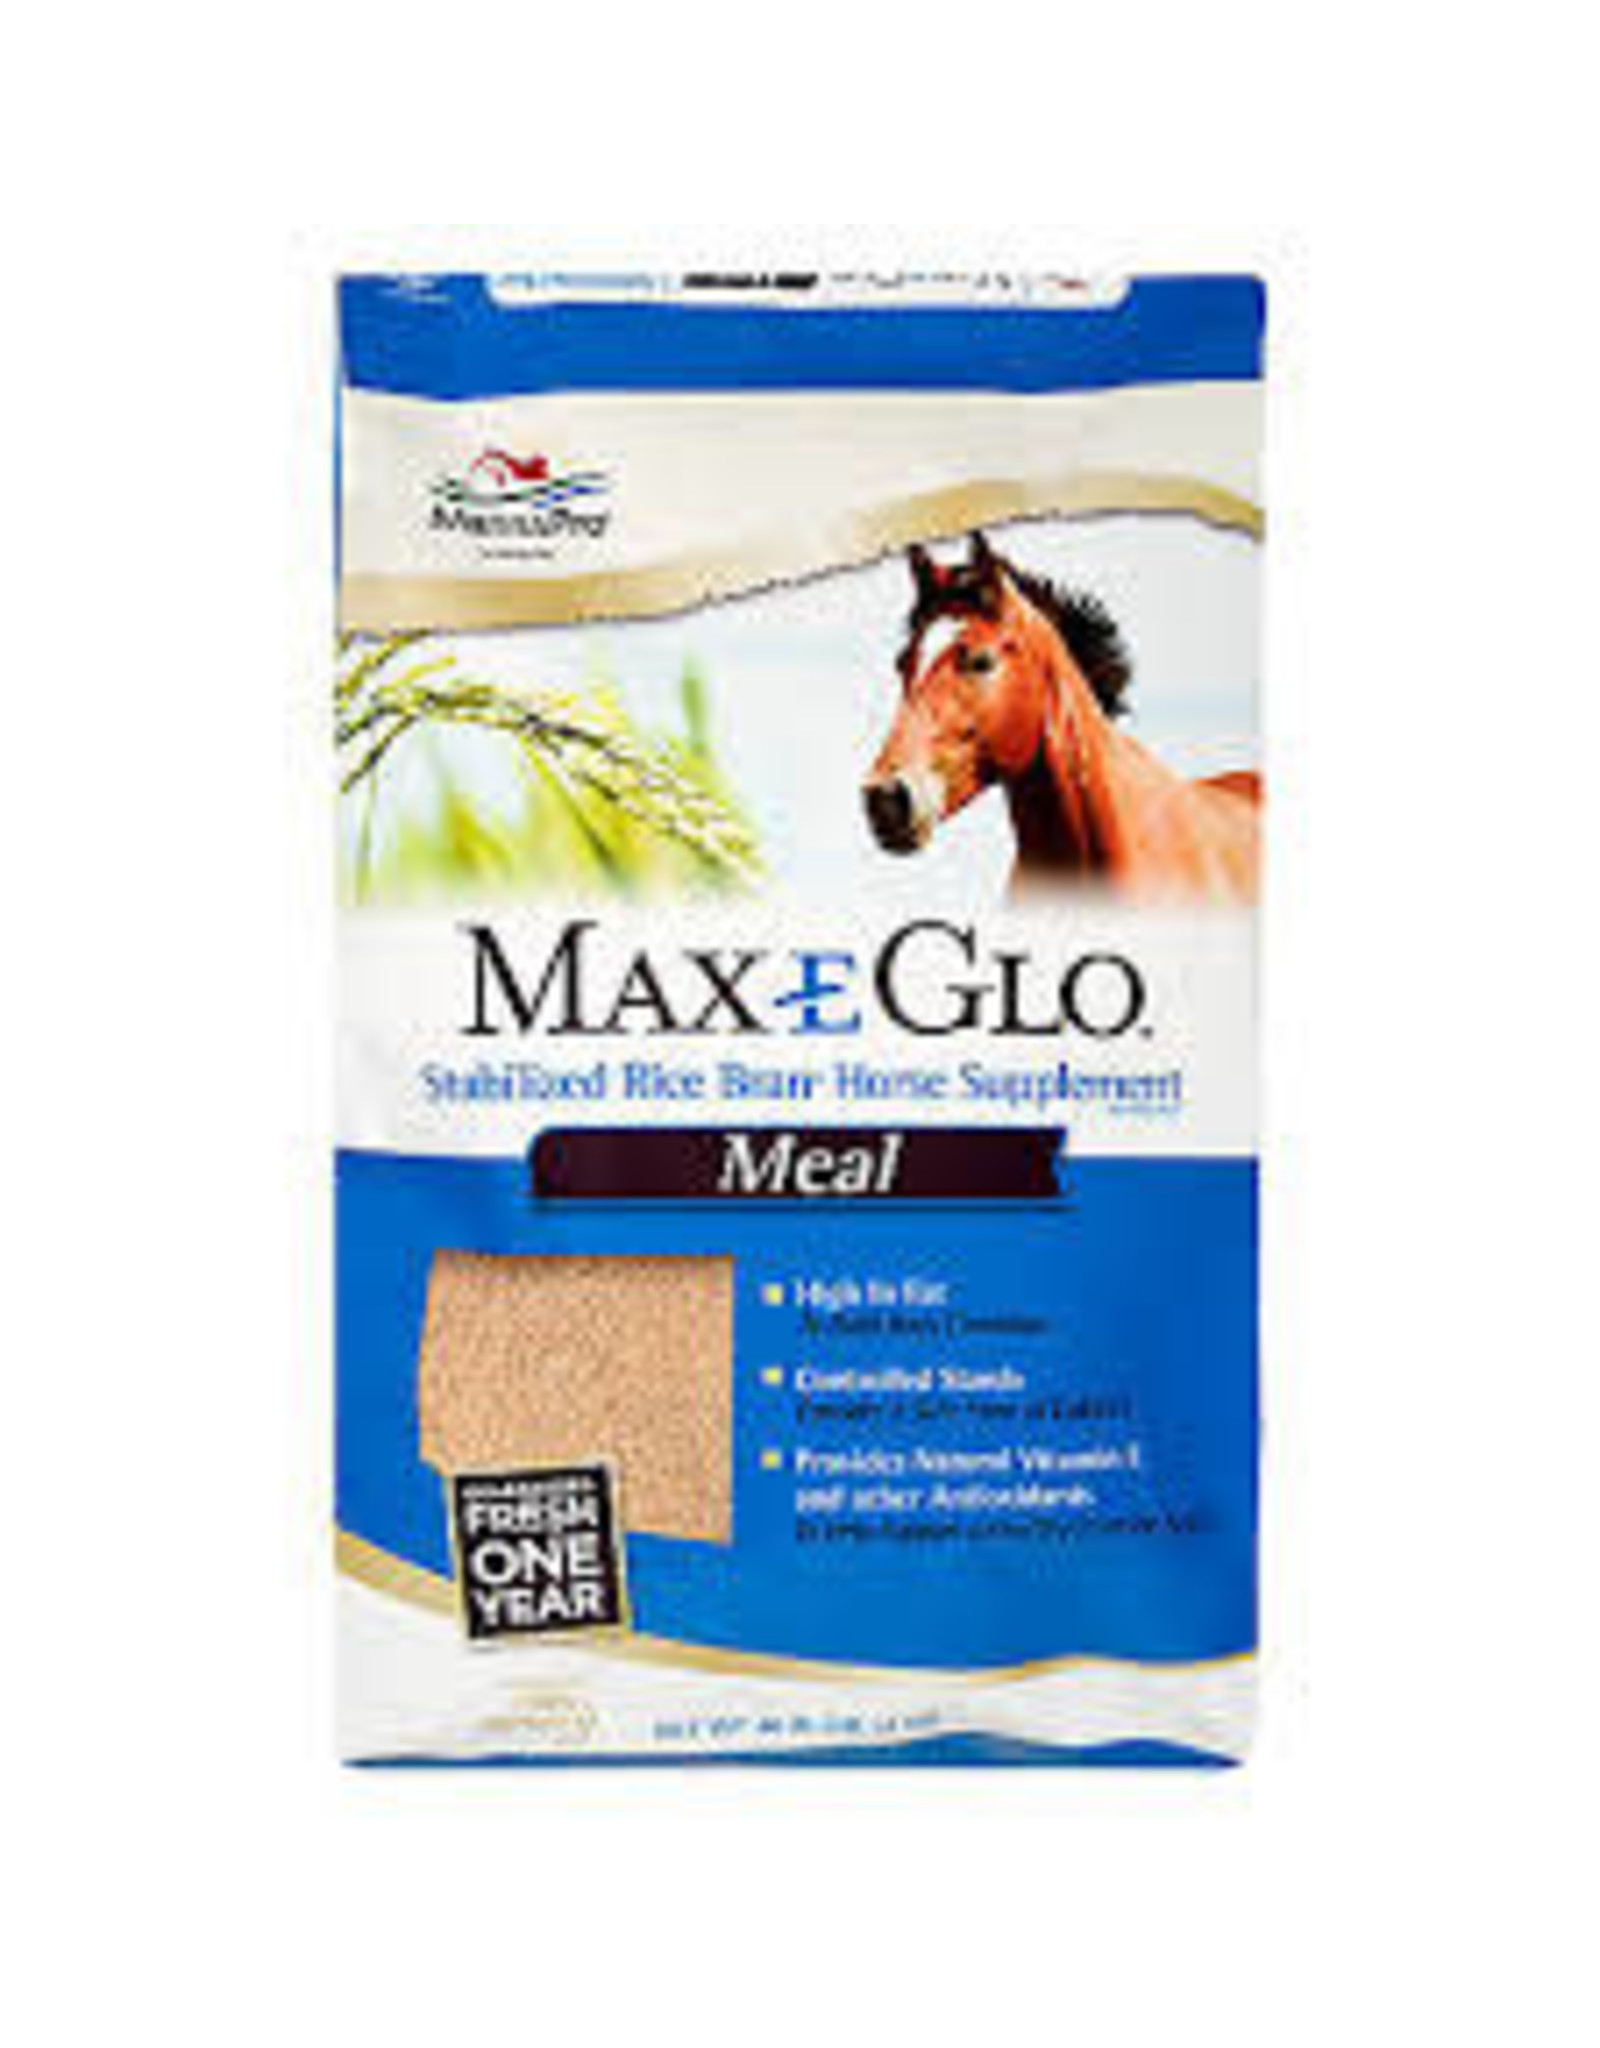 Manna Pro Max E Glo Rice Bran Meal 18kg - NSC 20% - CP 13%, Fat 18%, Fiber 8.5%  - M855- blue. IN STORE - C-Can